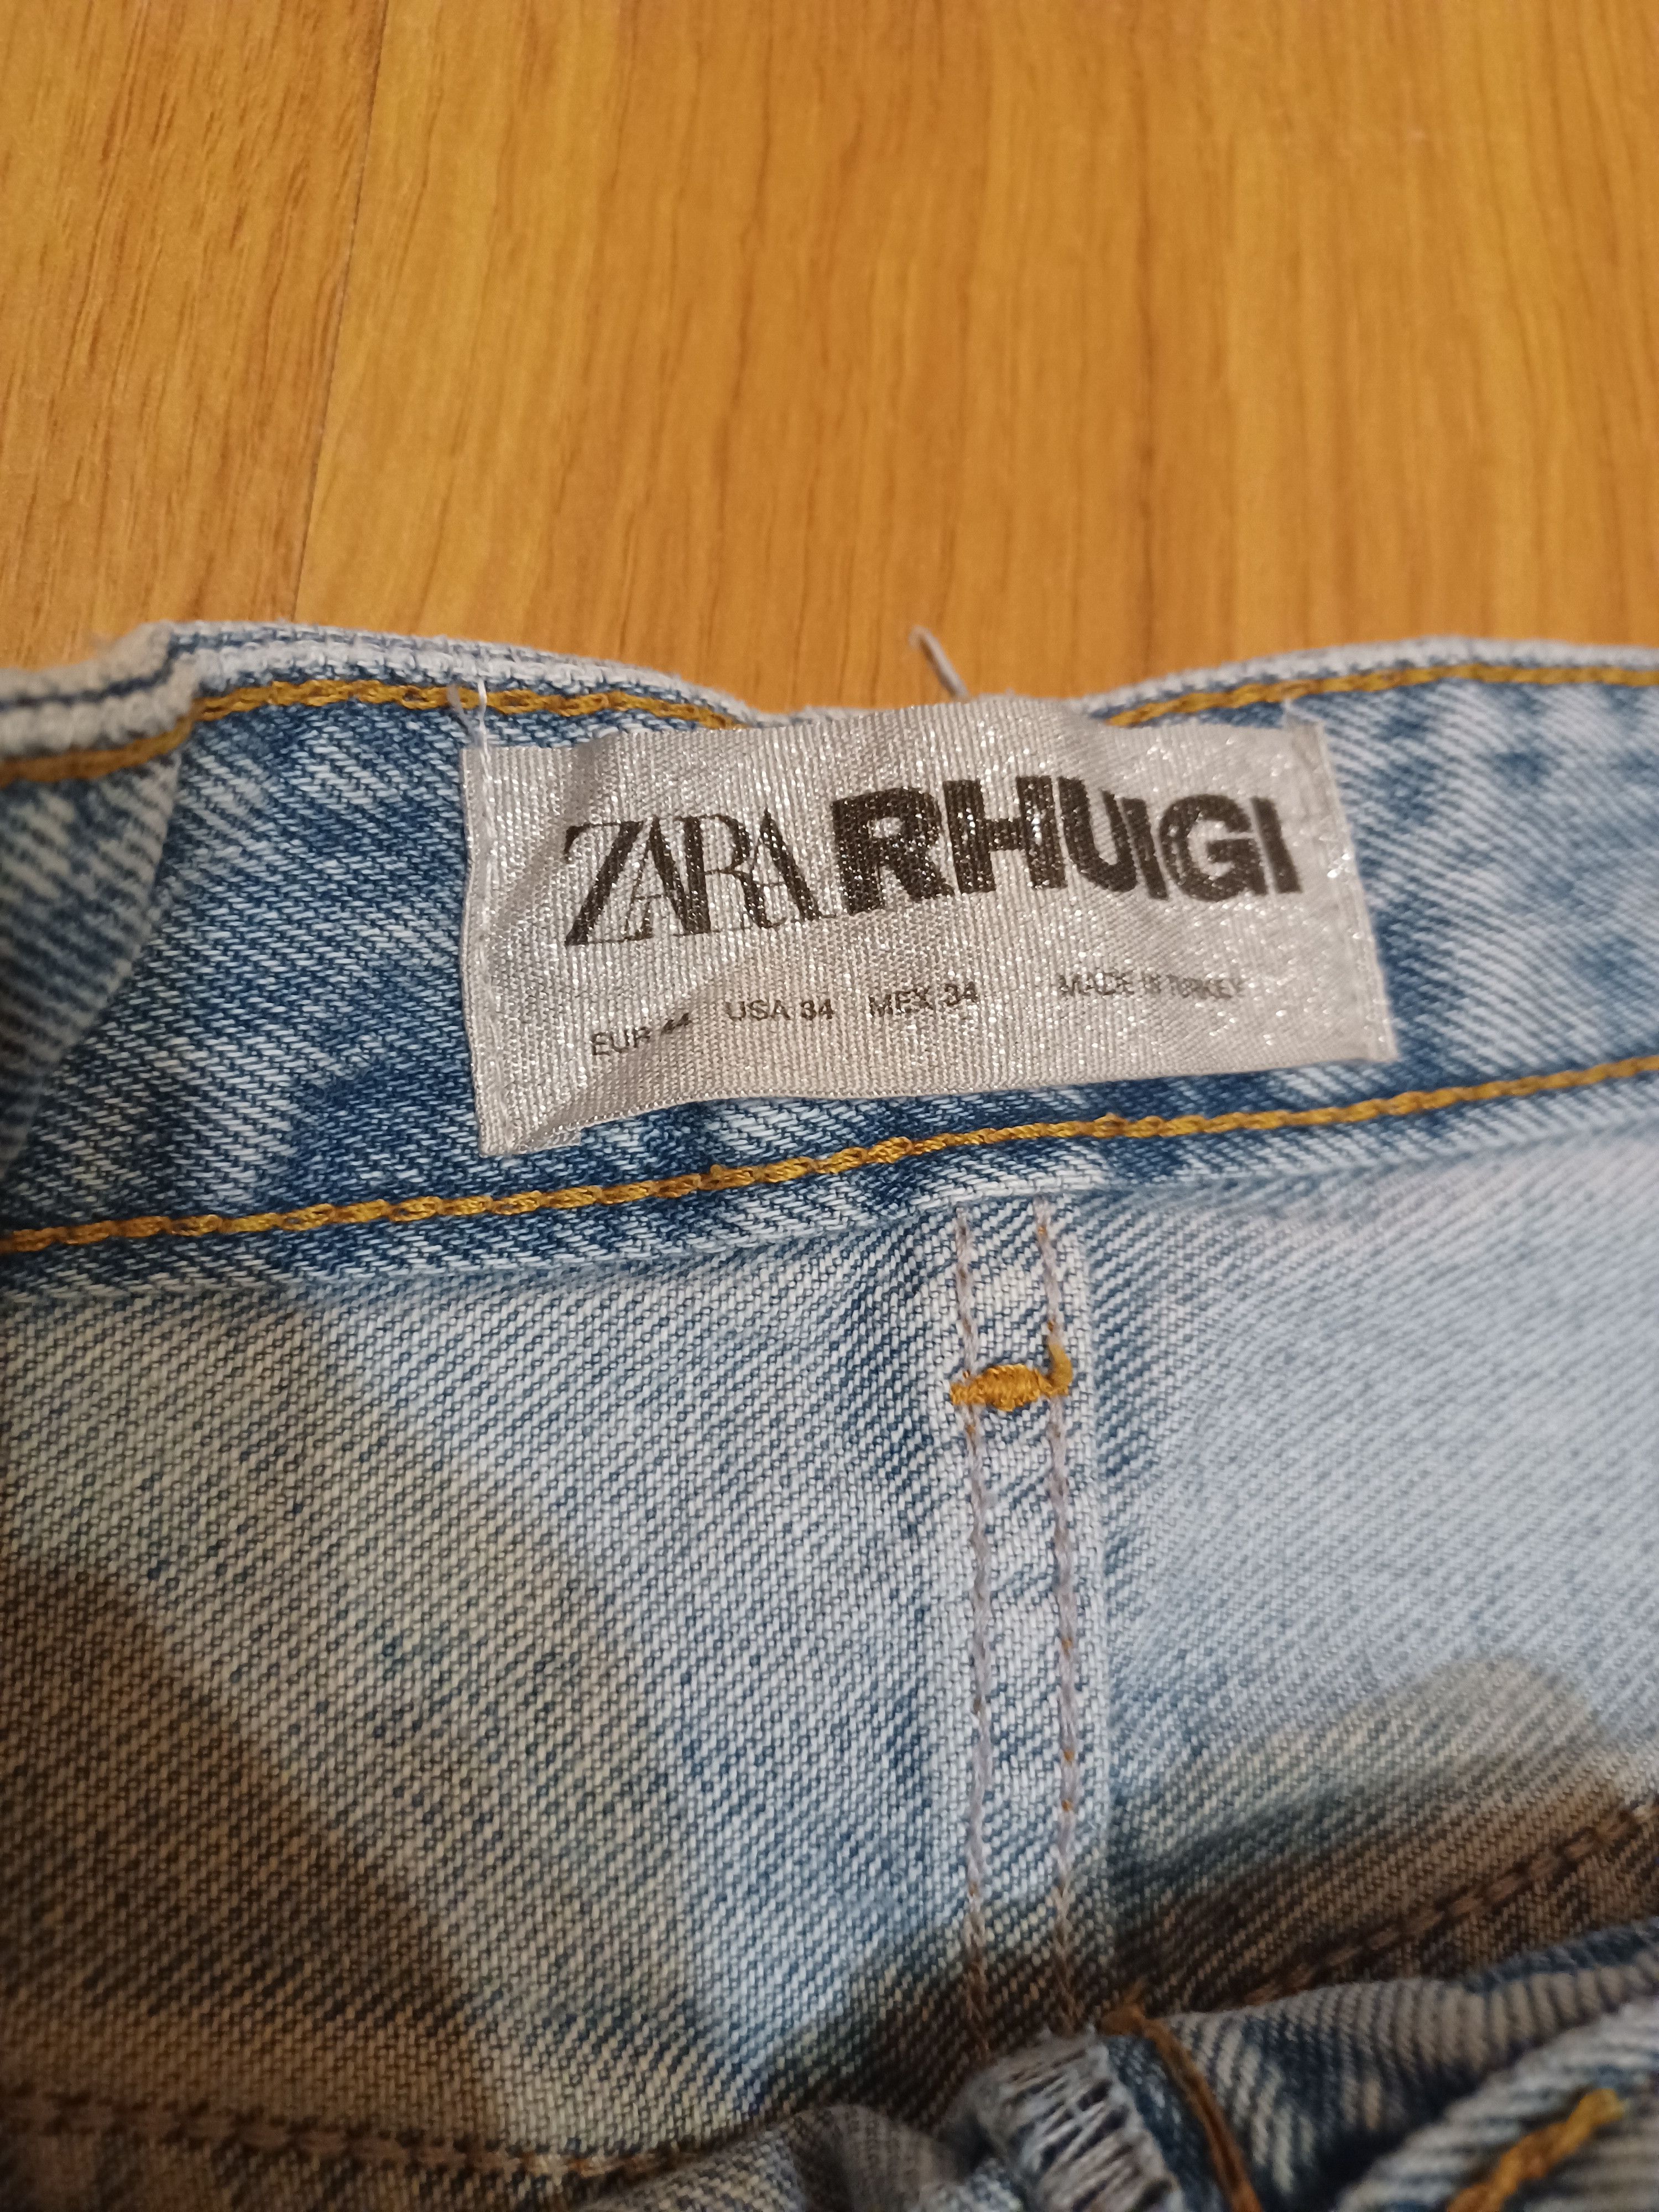 Zara Rhuigi x Zara 34 baggy light blue jeans Size US 34 / EU 50 - 2 Preview